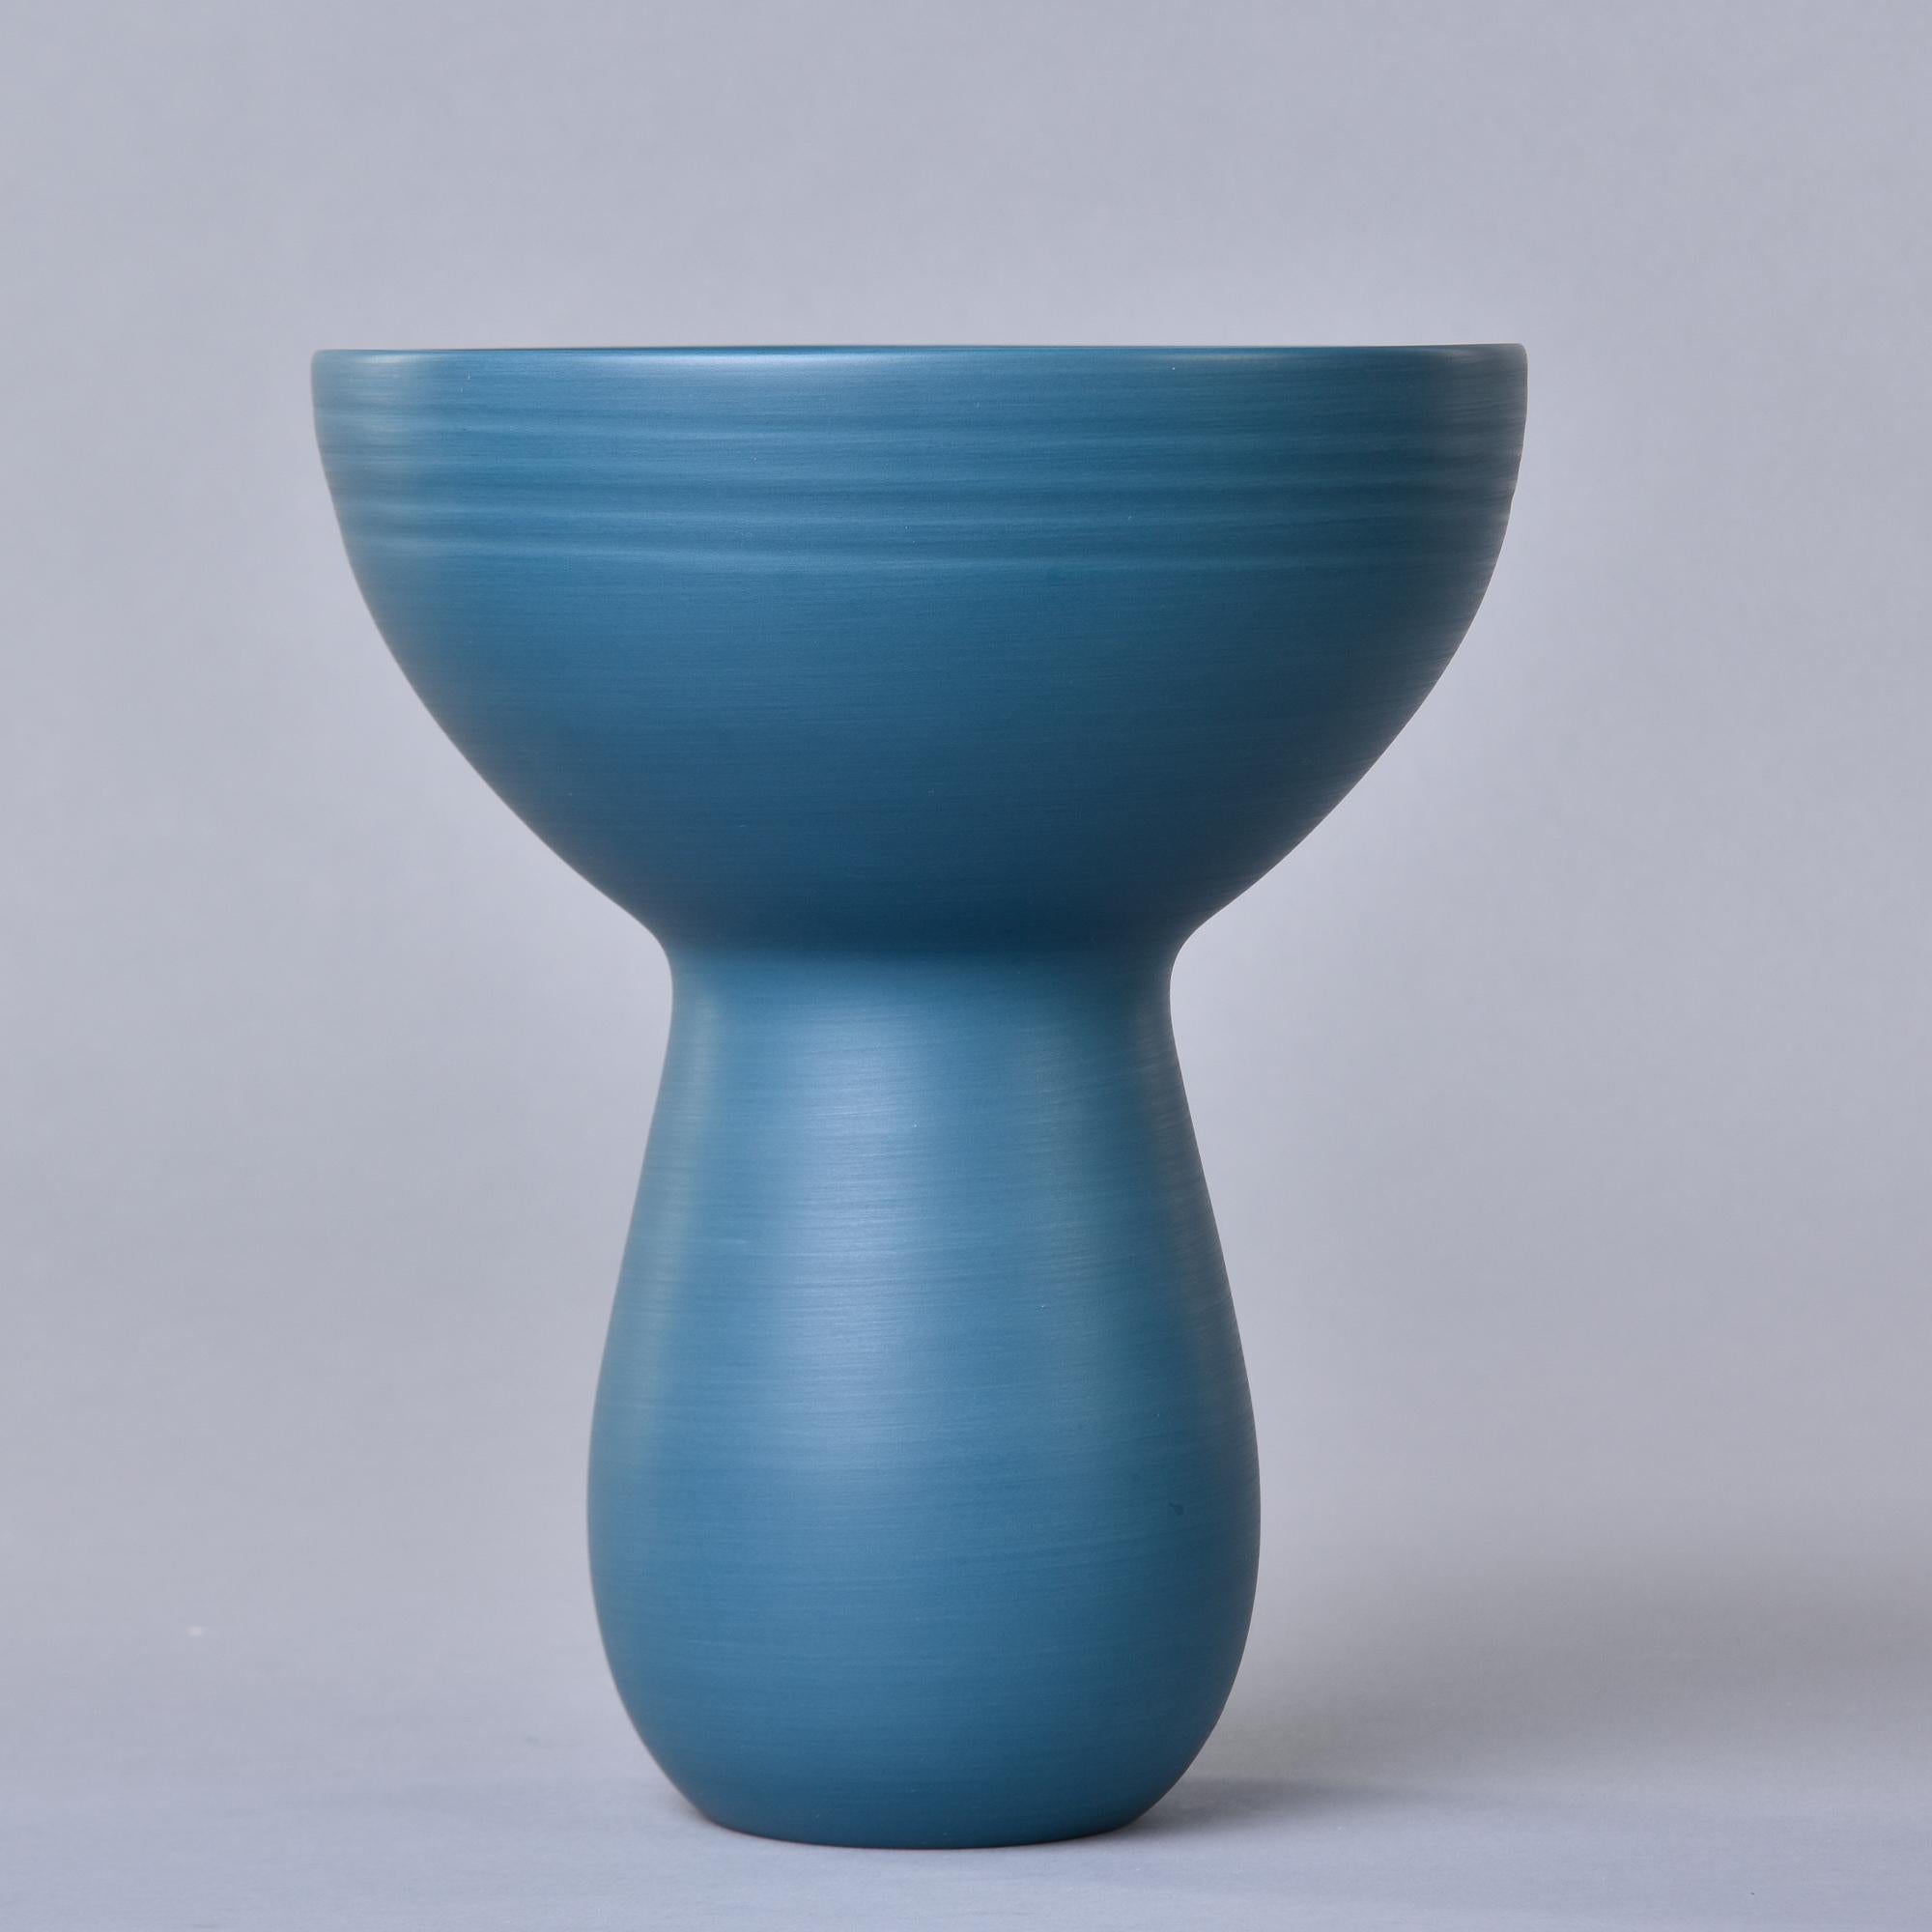 Italian Rina Menardi Small Bouquet Vase in Teal Blue For Sale